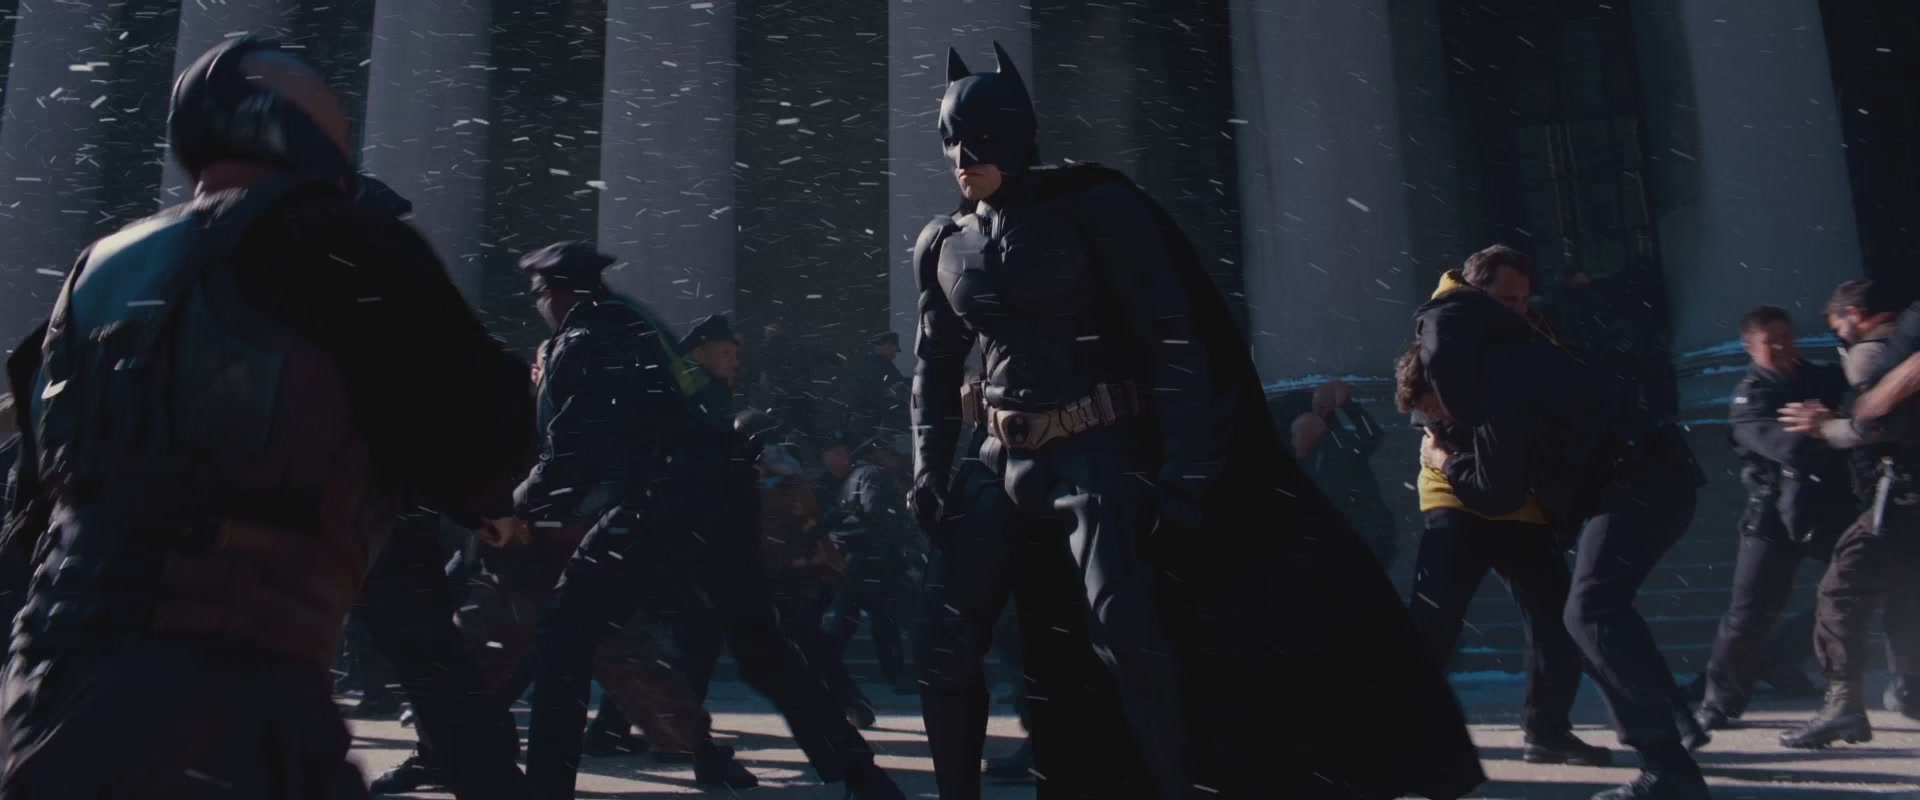 Batman The Dark Knight Rises: Trailer #1 (HD)